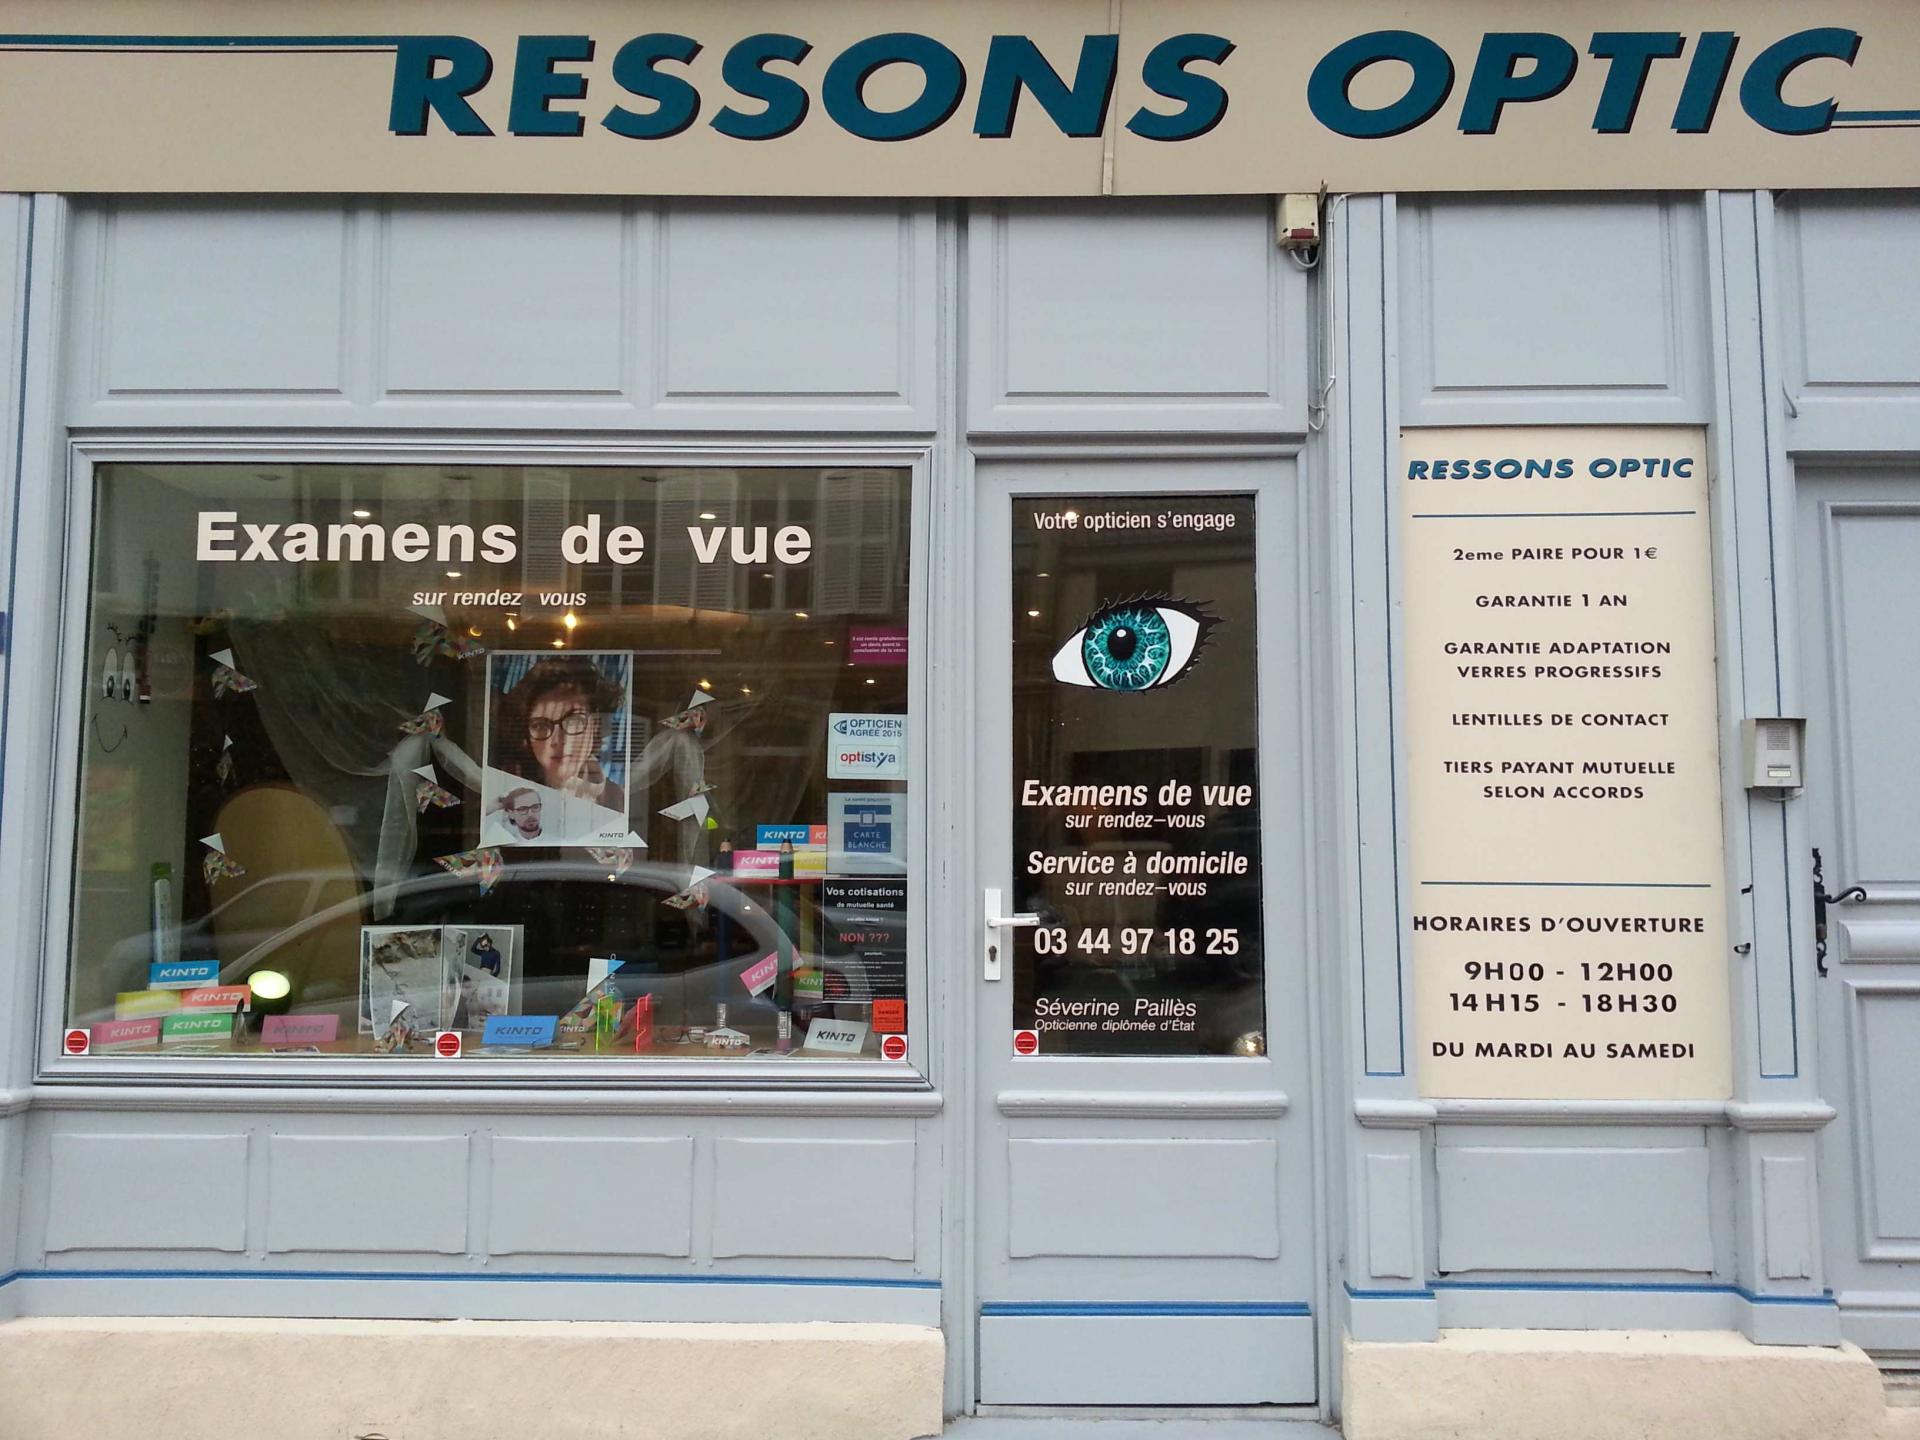 Optic ressons